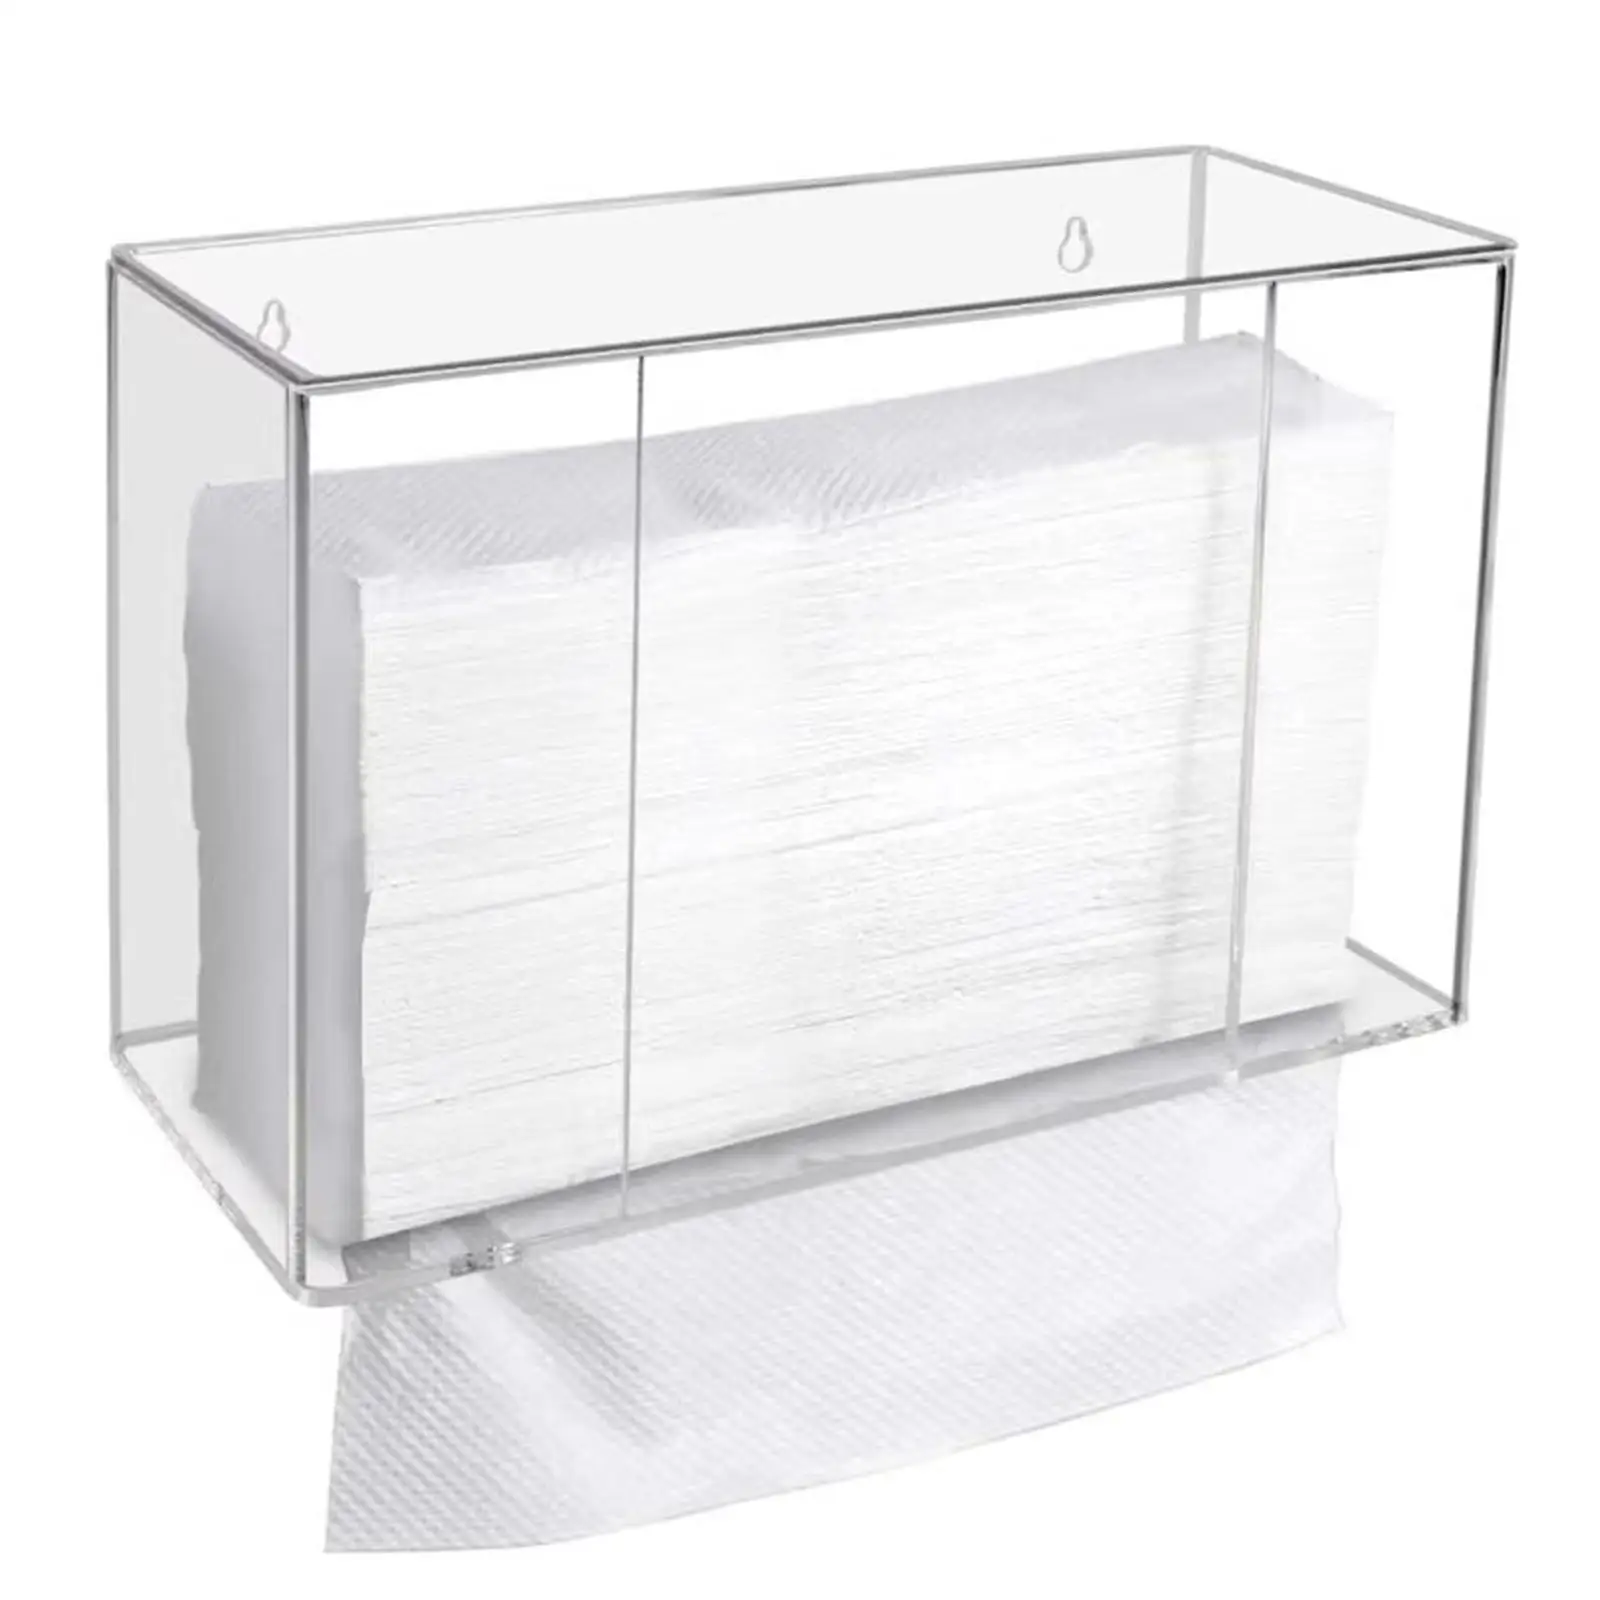 Tissue Box Holder Household Bathroom Facial Acrylic Tissue Box Paper Towel Holder for Bathroom Home Decorative living Room